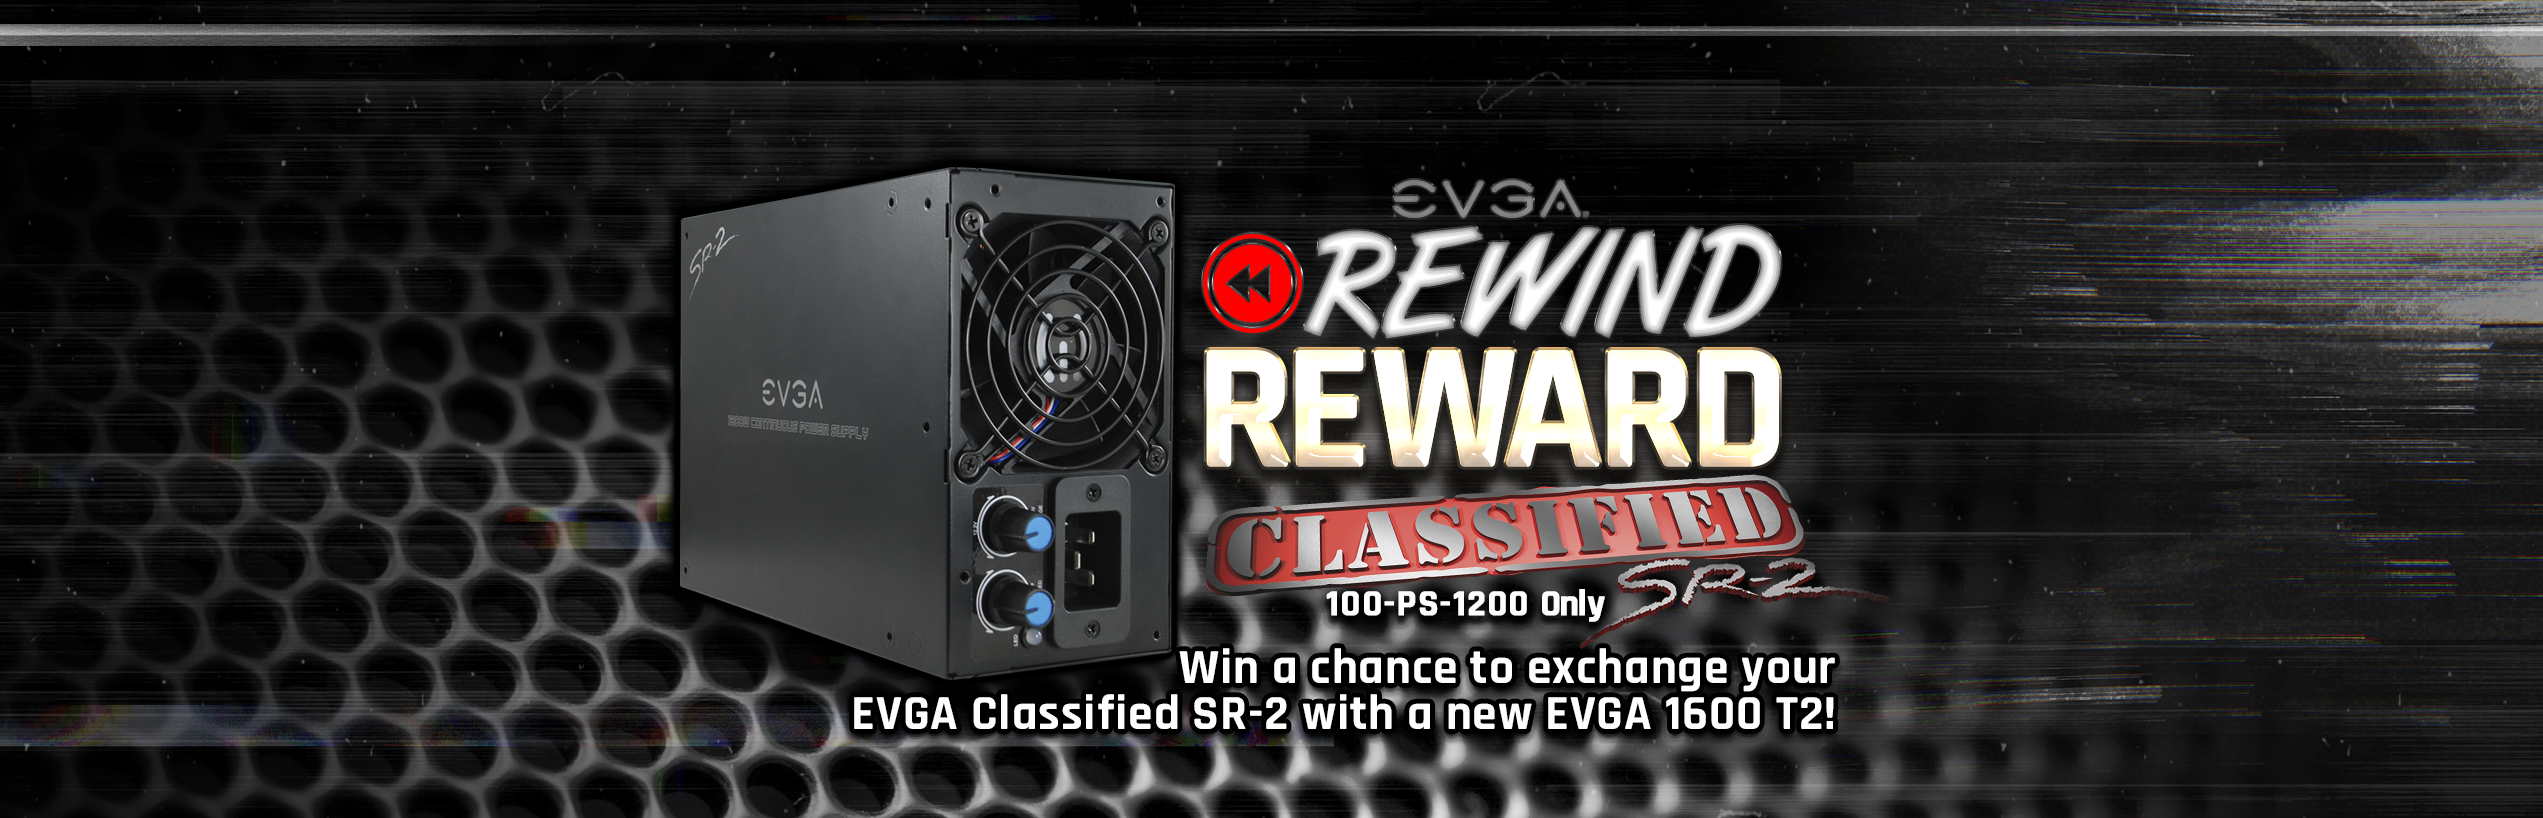 EVGA Classified SR-2 Power Supply Rewind Reward Giveaway